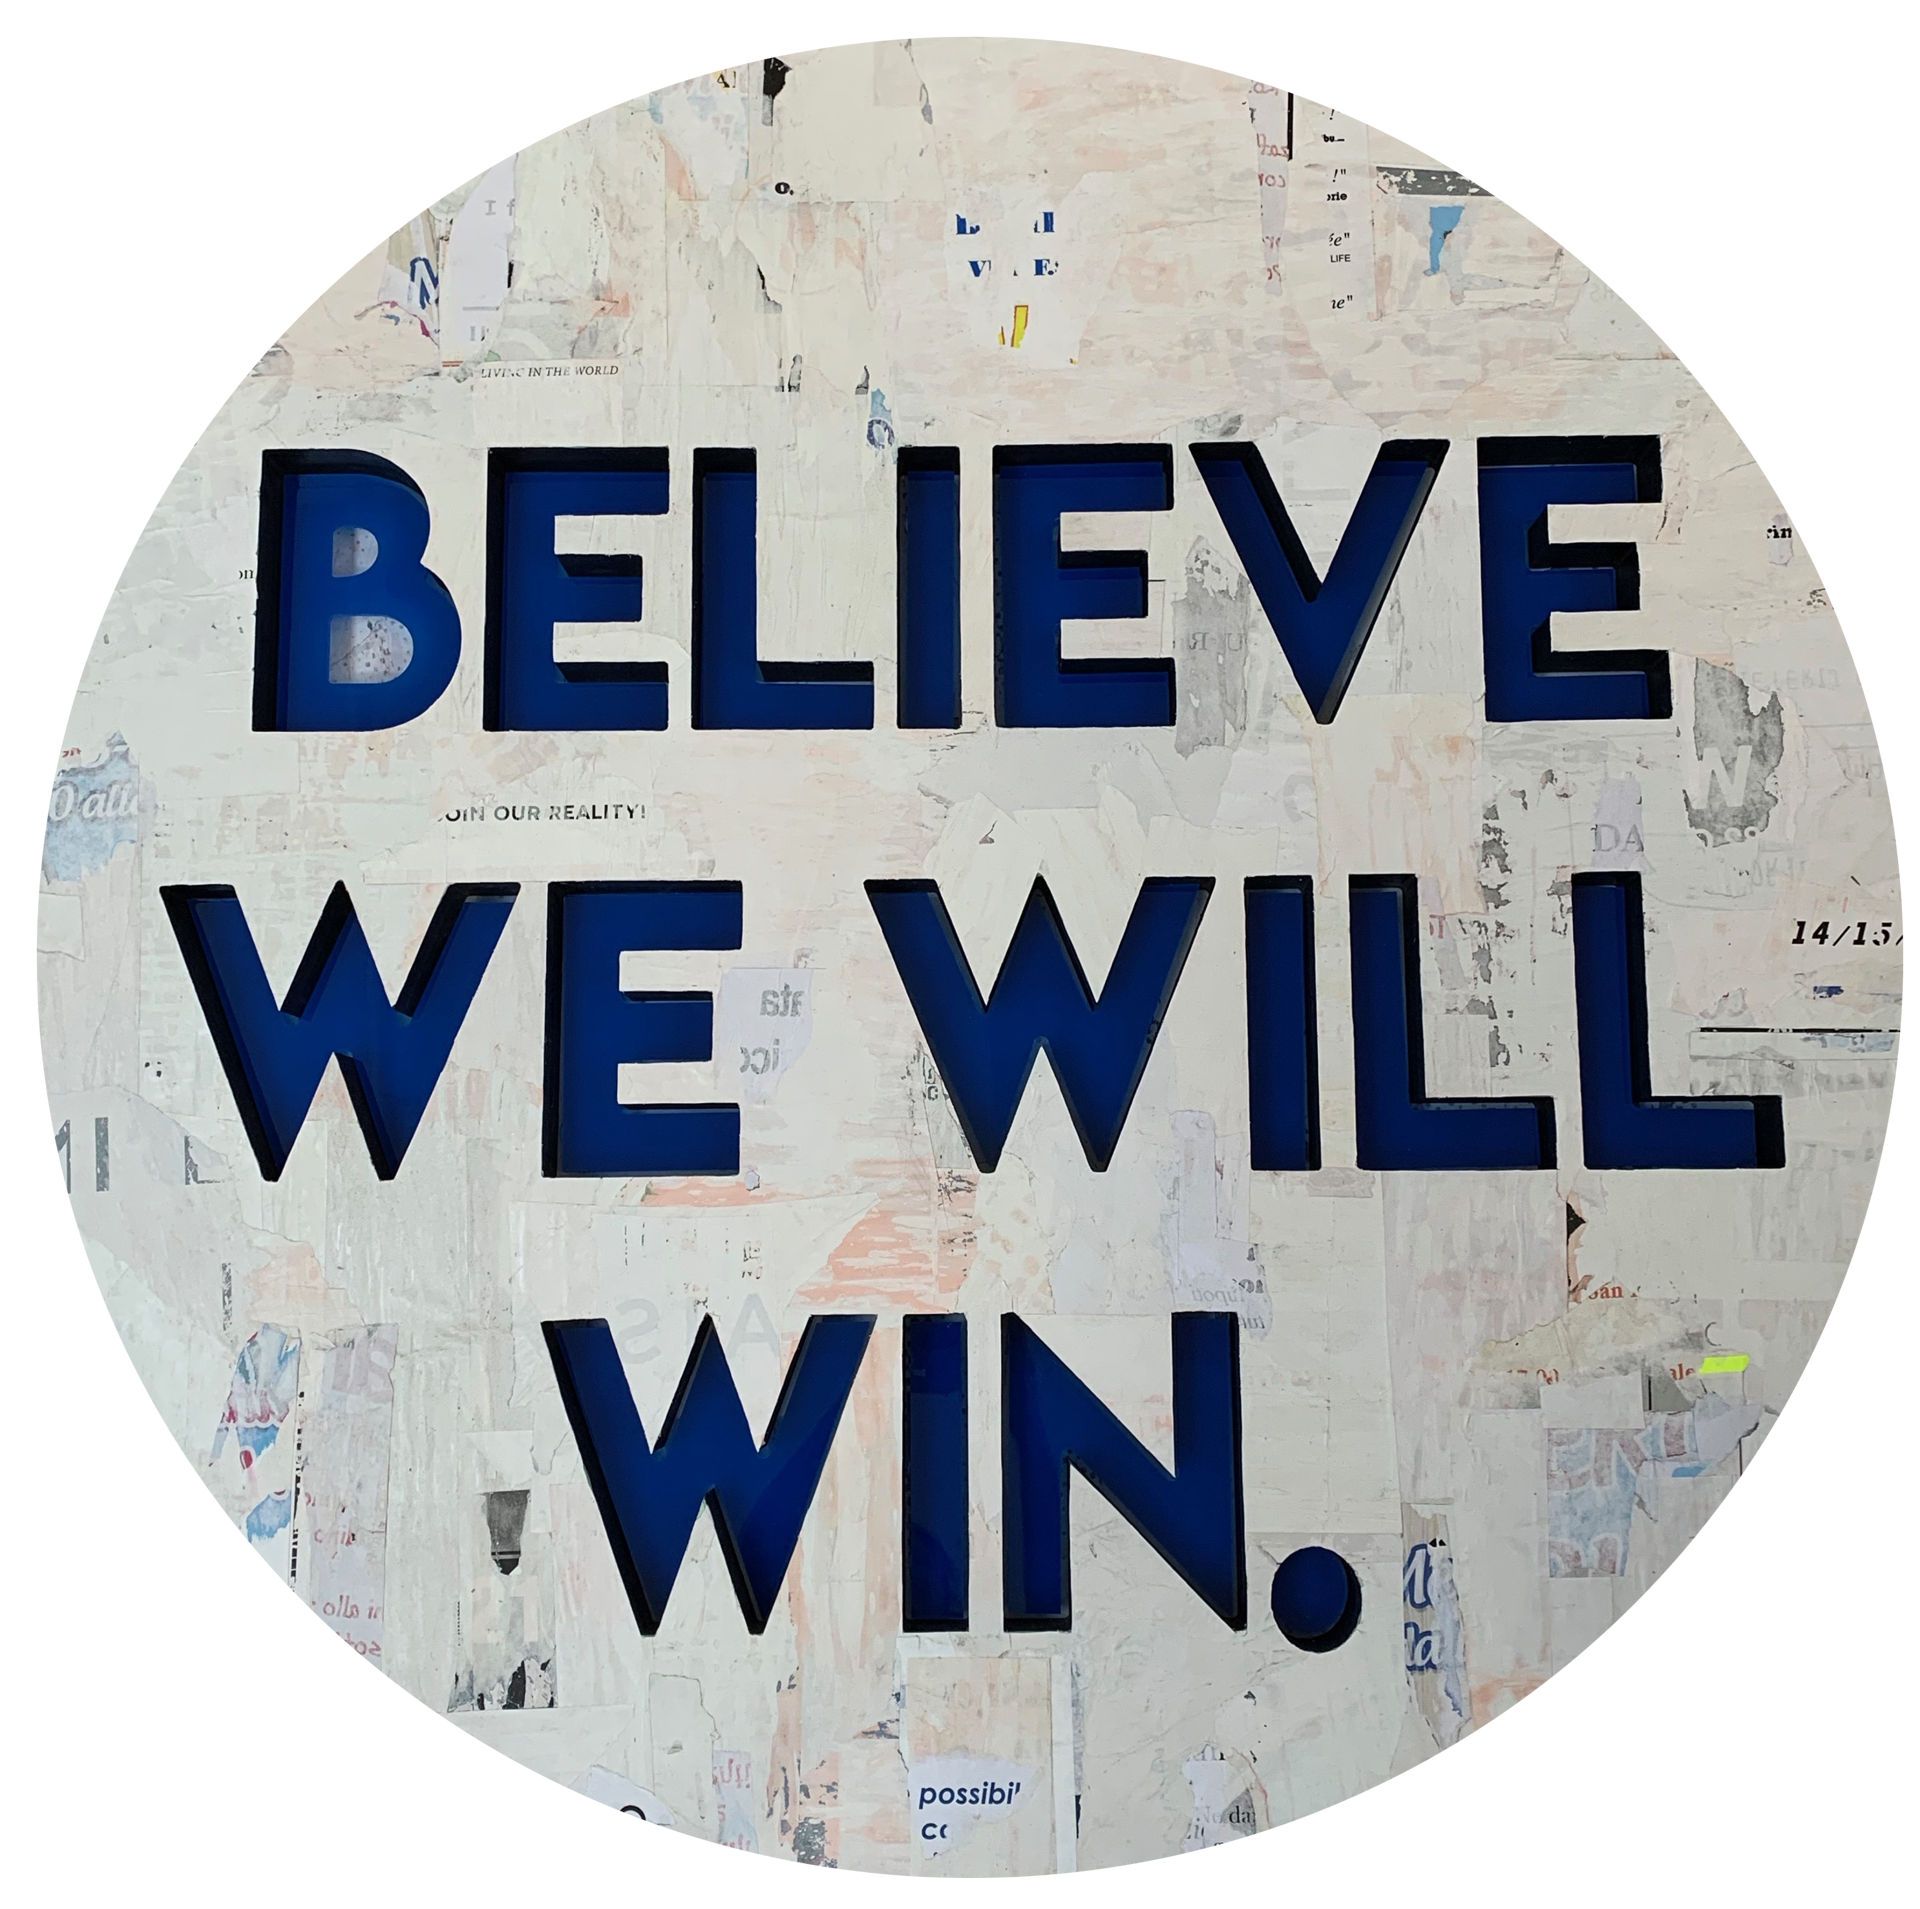 Believe we will win by Jane Maxwell